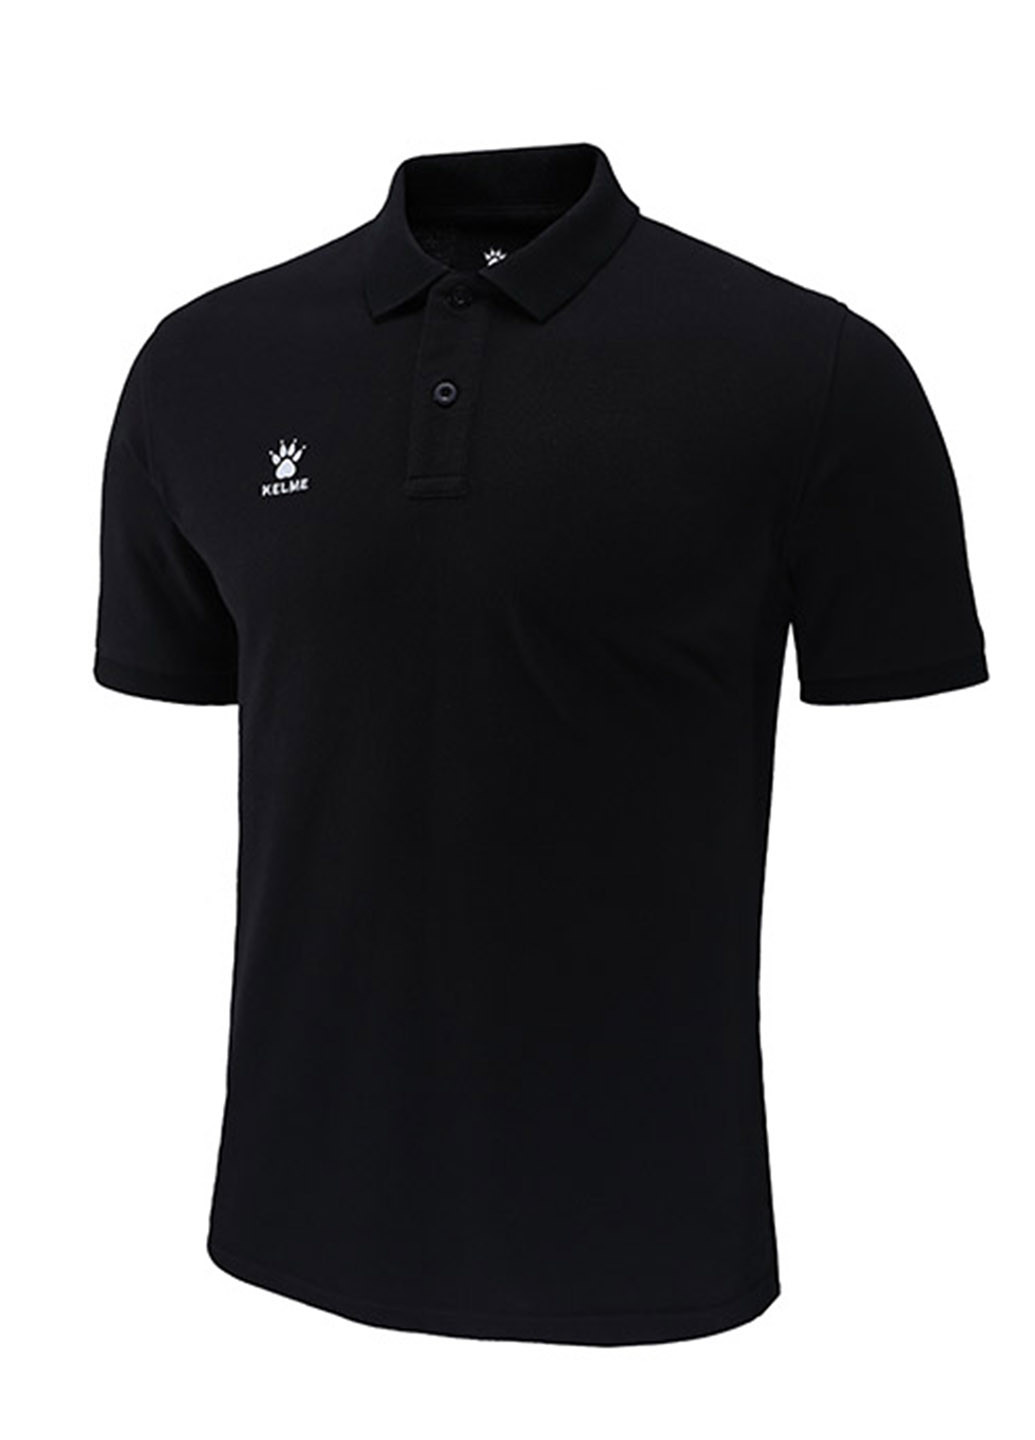 Черная футболка-поло для мужчин Kelme с логотипом